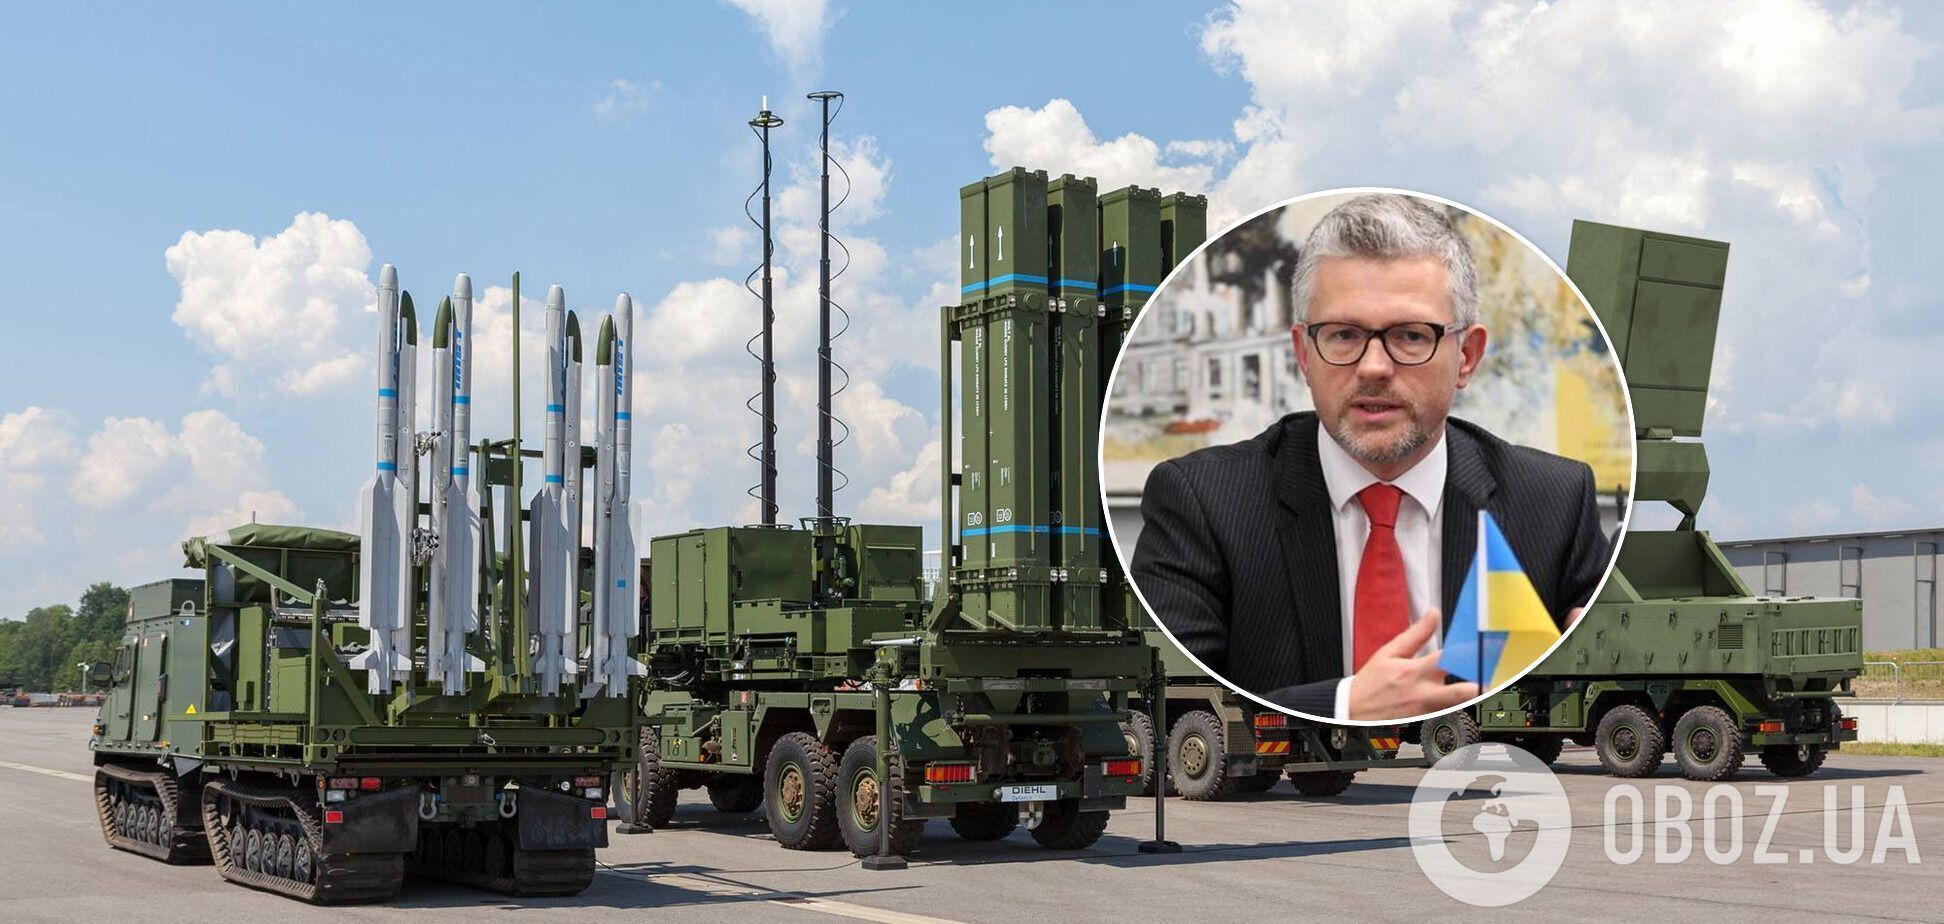 Контракт подписан: Украина договорилась о поставках немецких систем ПВО IRIS-T